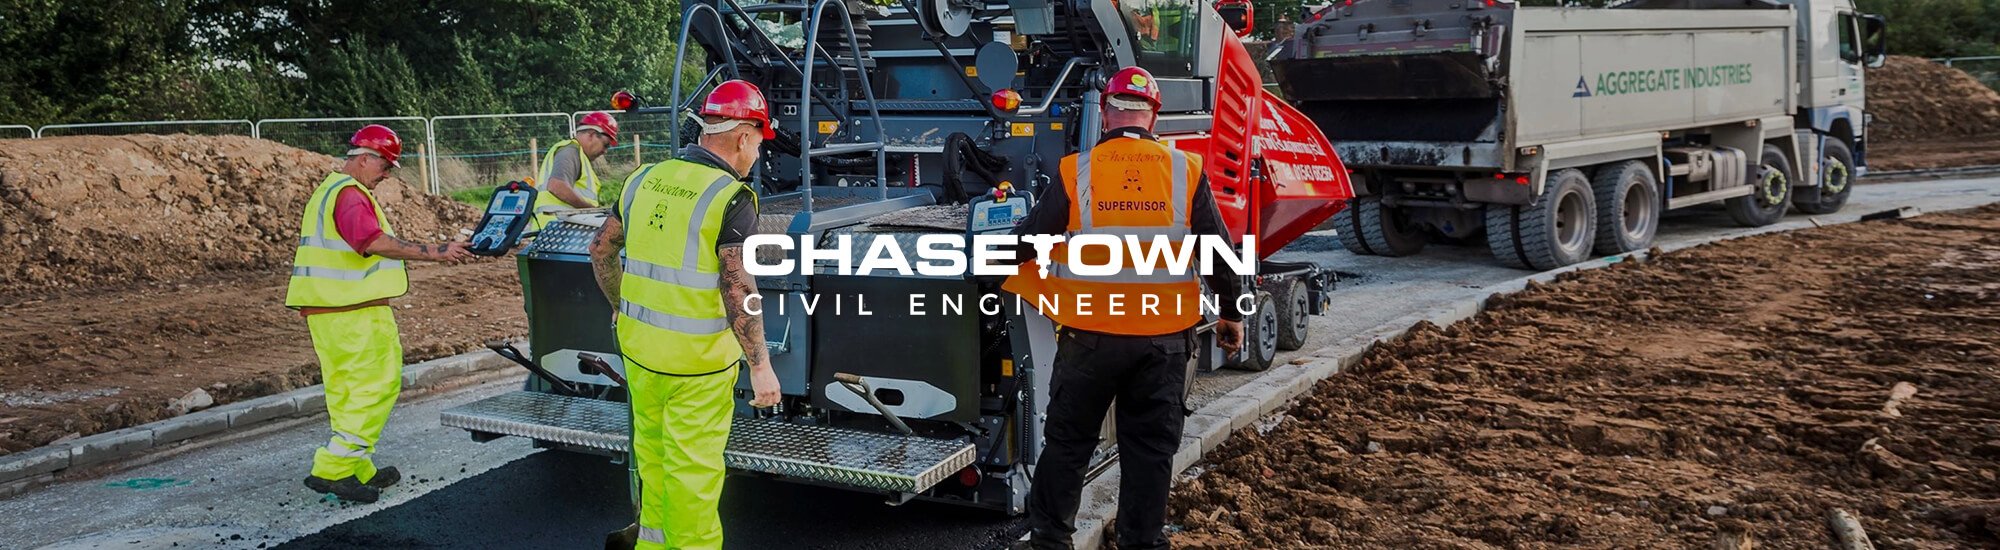 Chasetown Civil Engineering Banner.